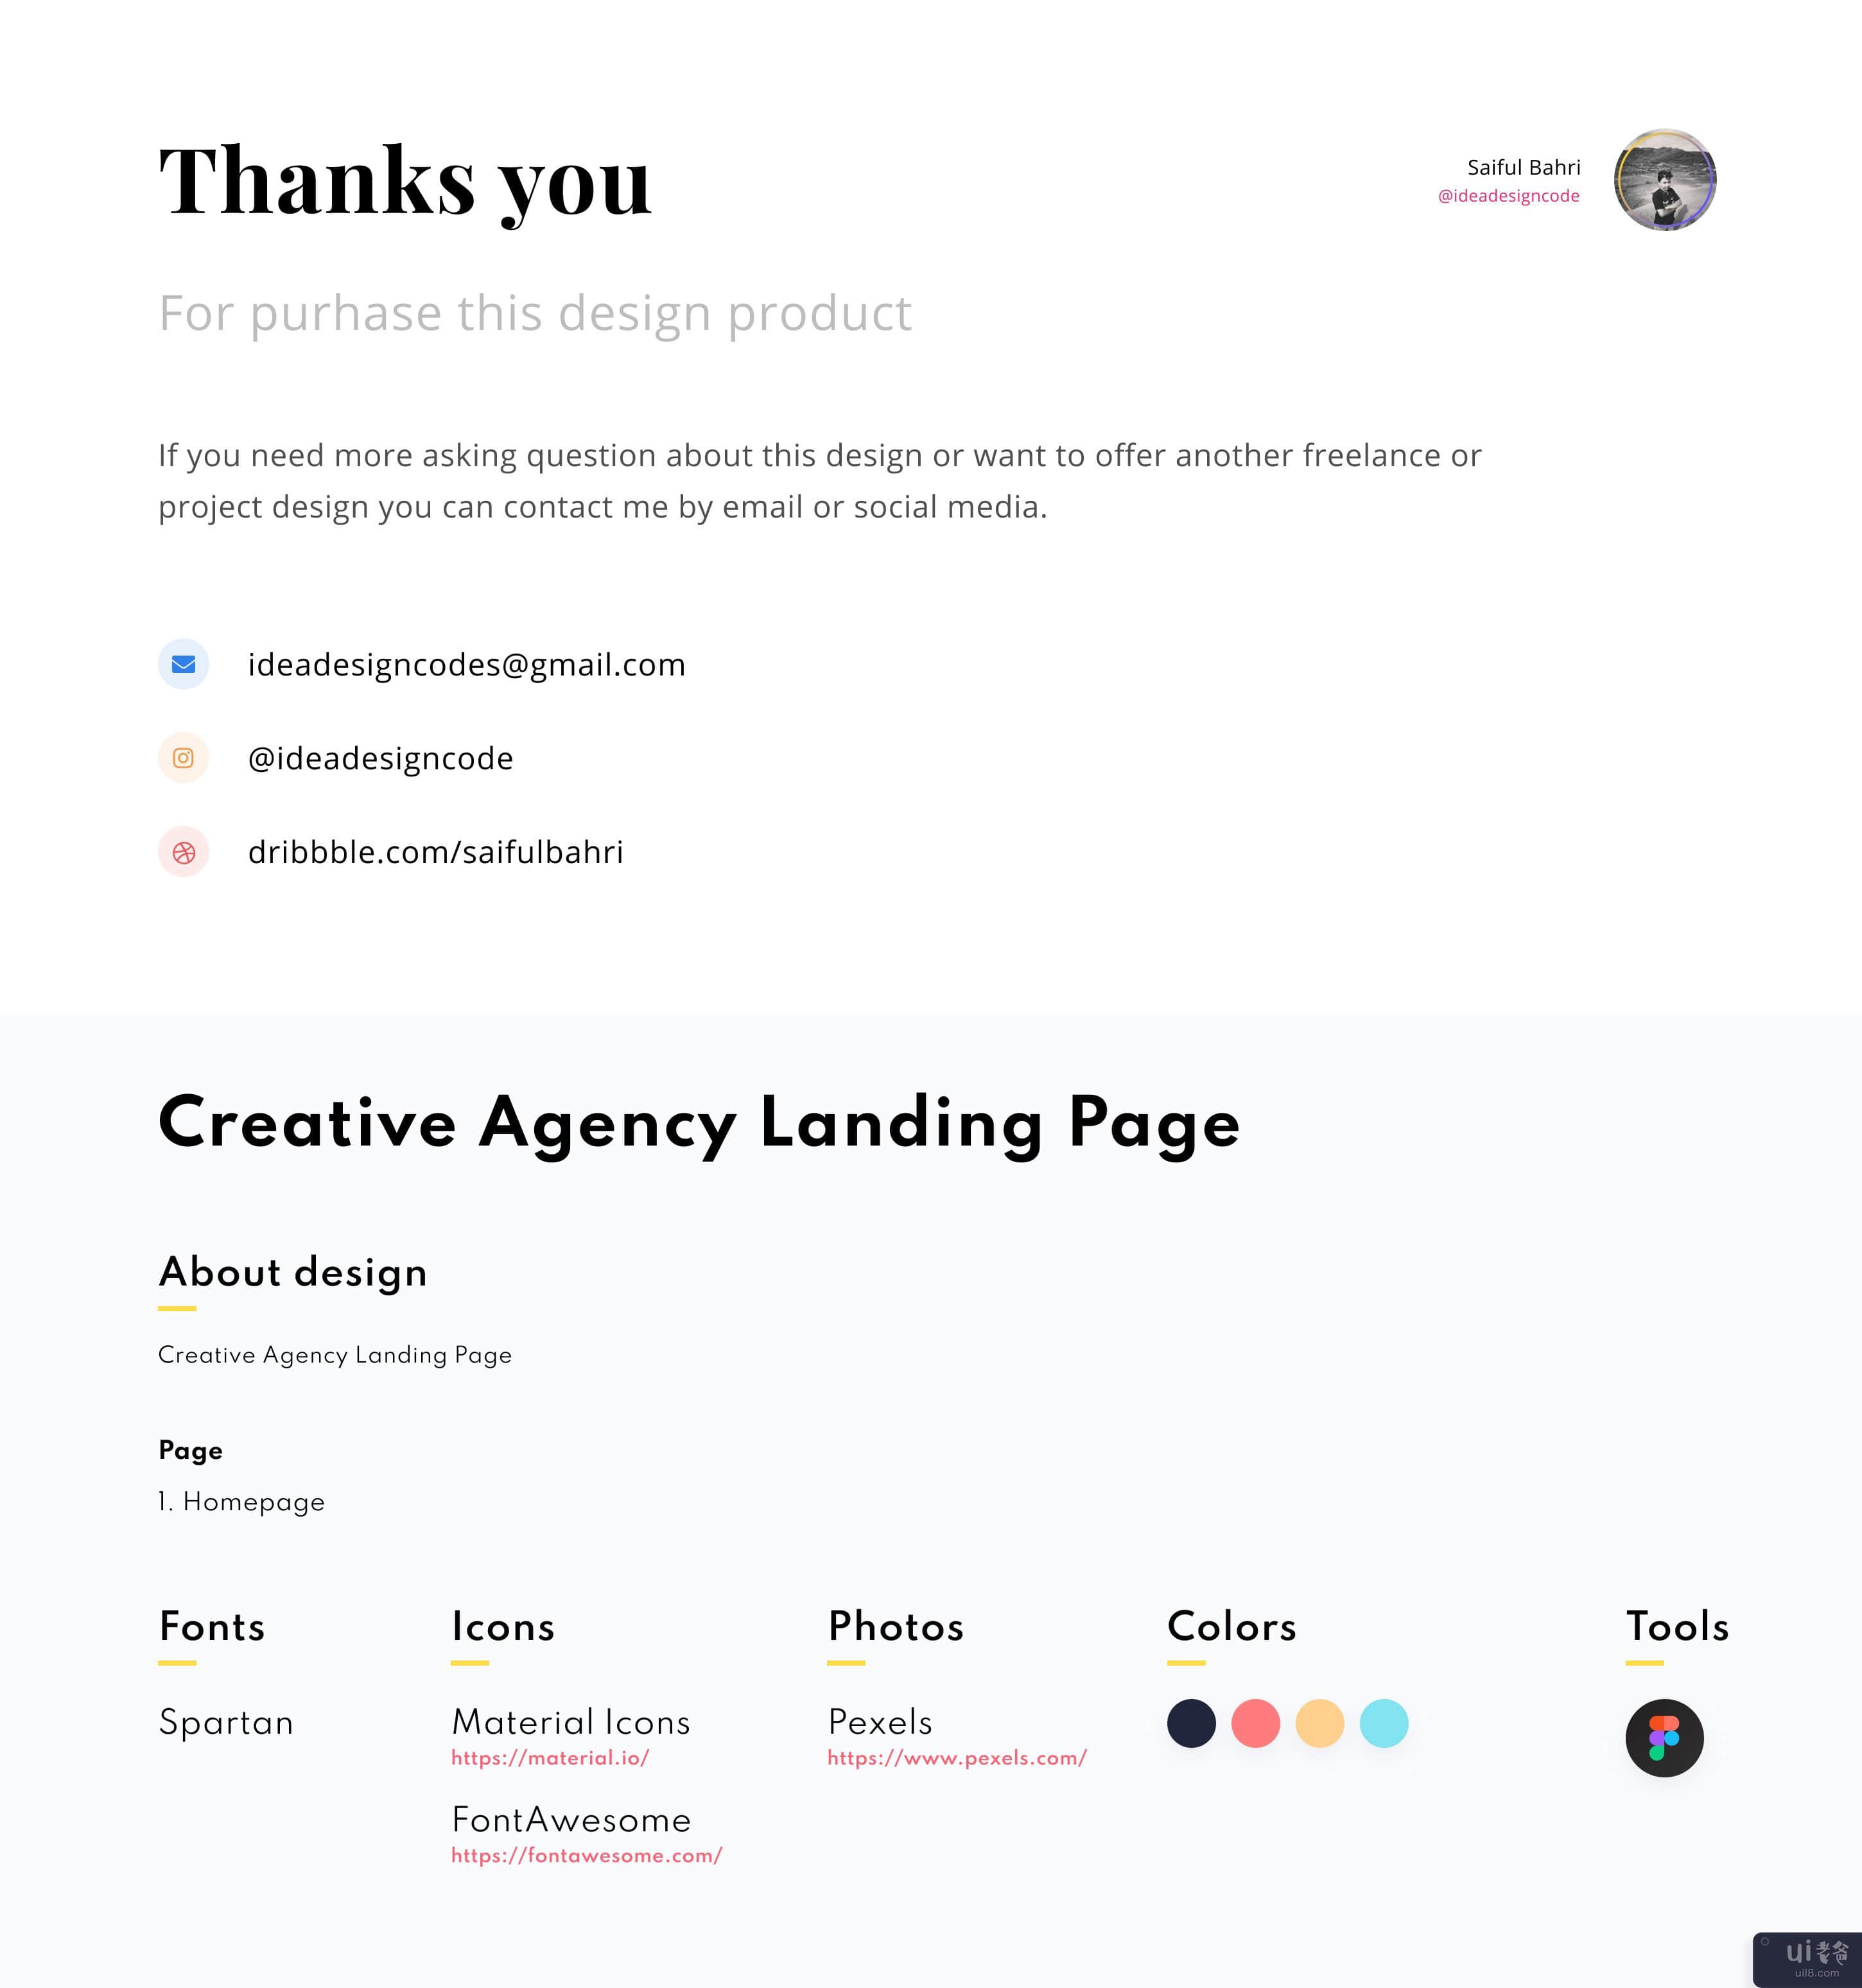 创意机构登陆页面(Creative Agency Landing Page)插图